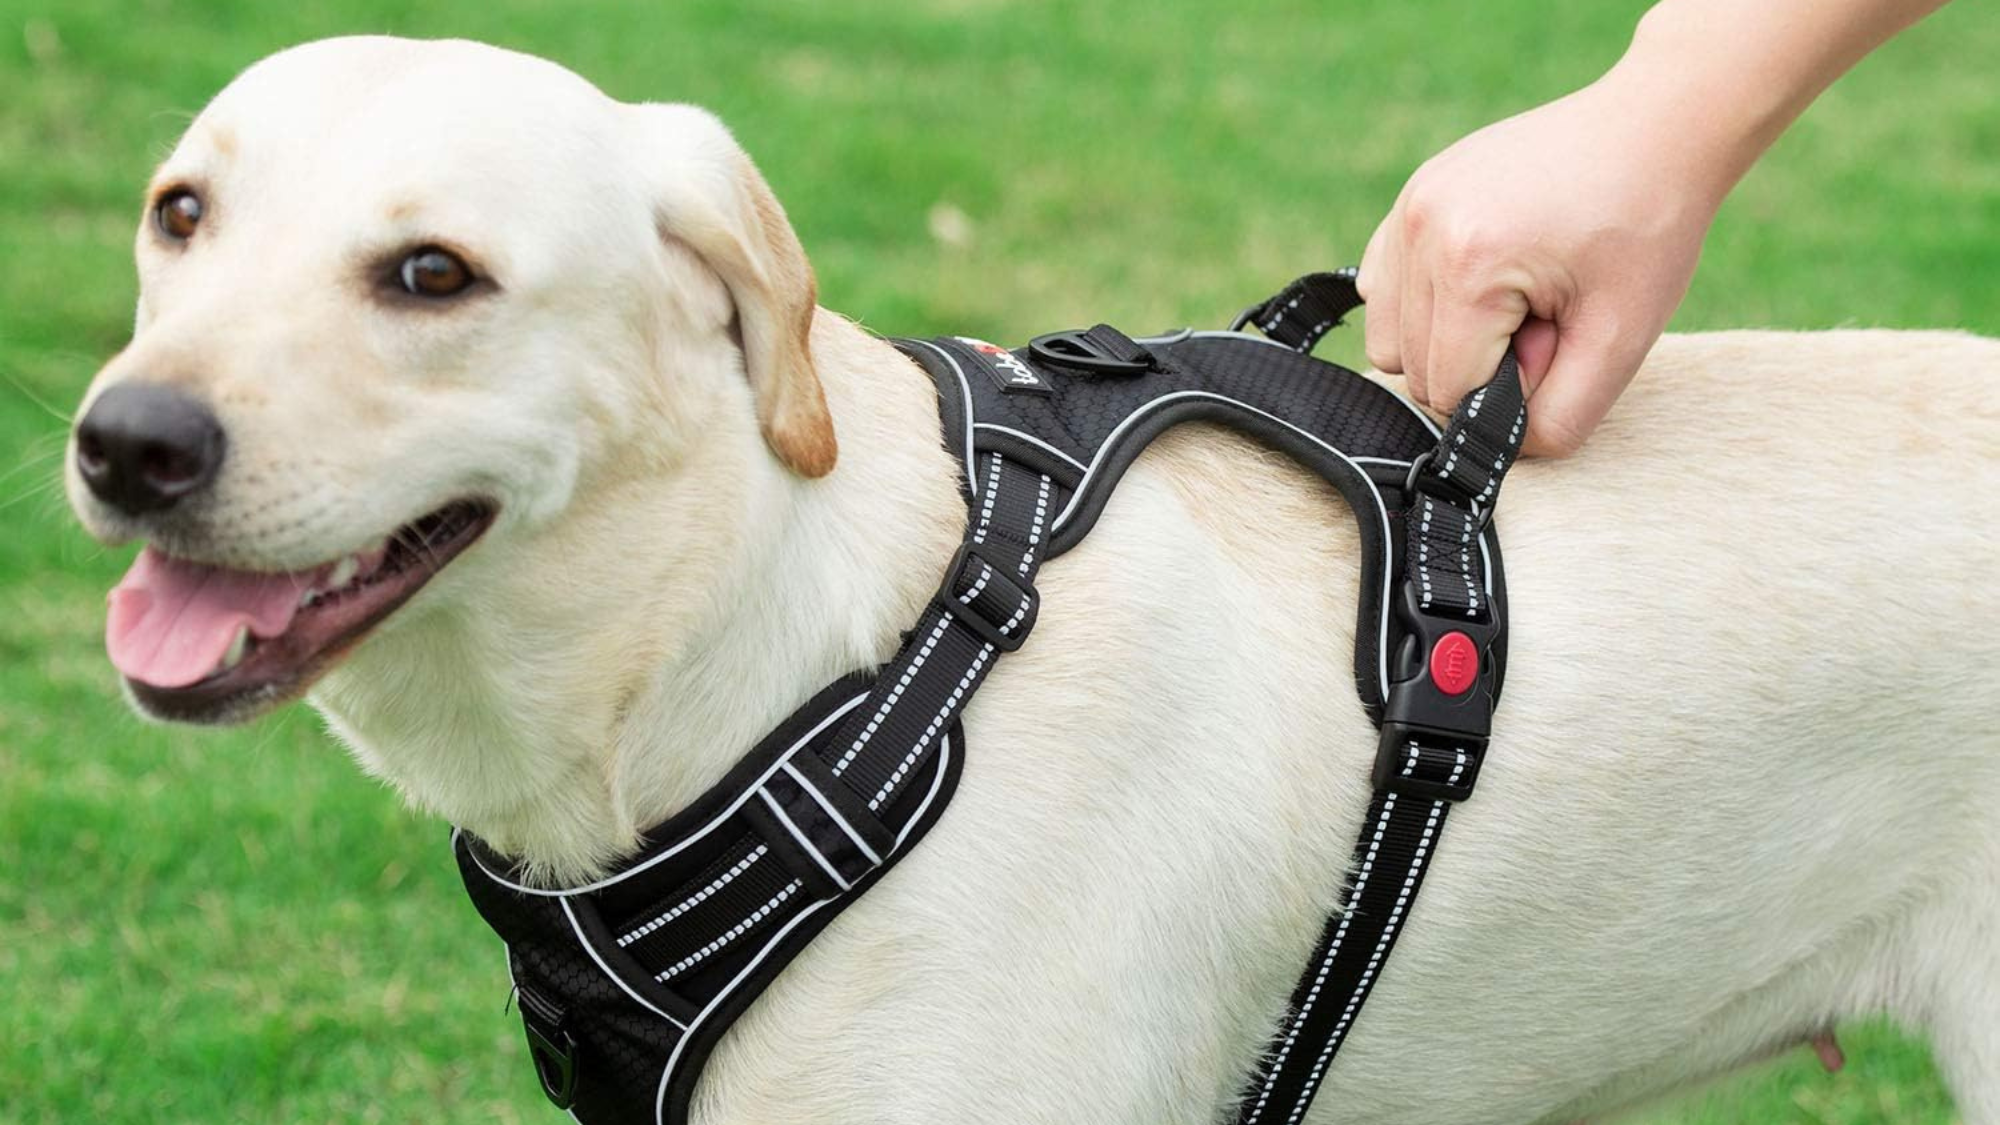 Dog Harness and Leash Set